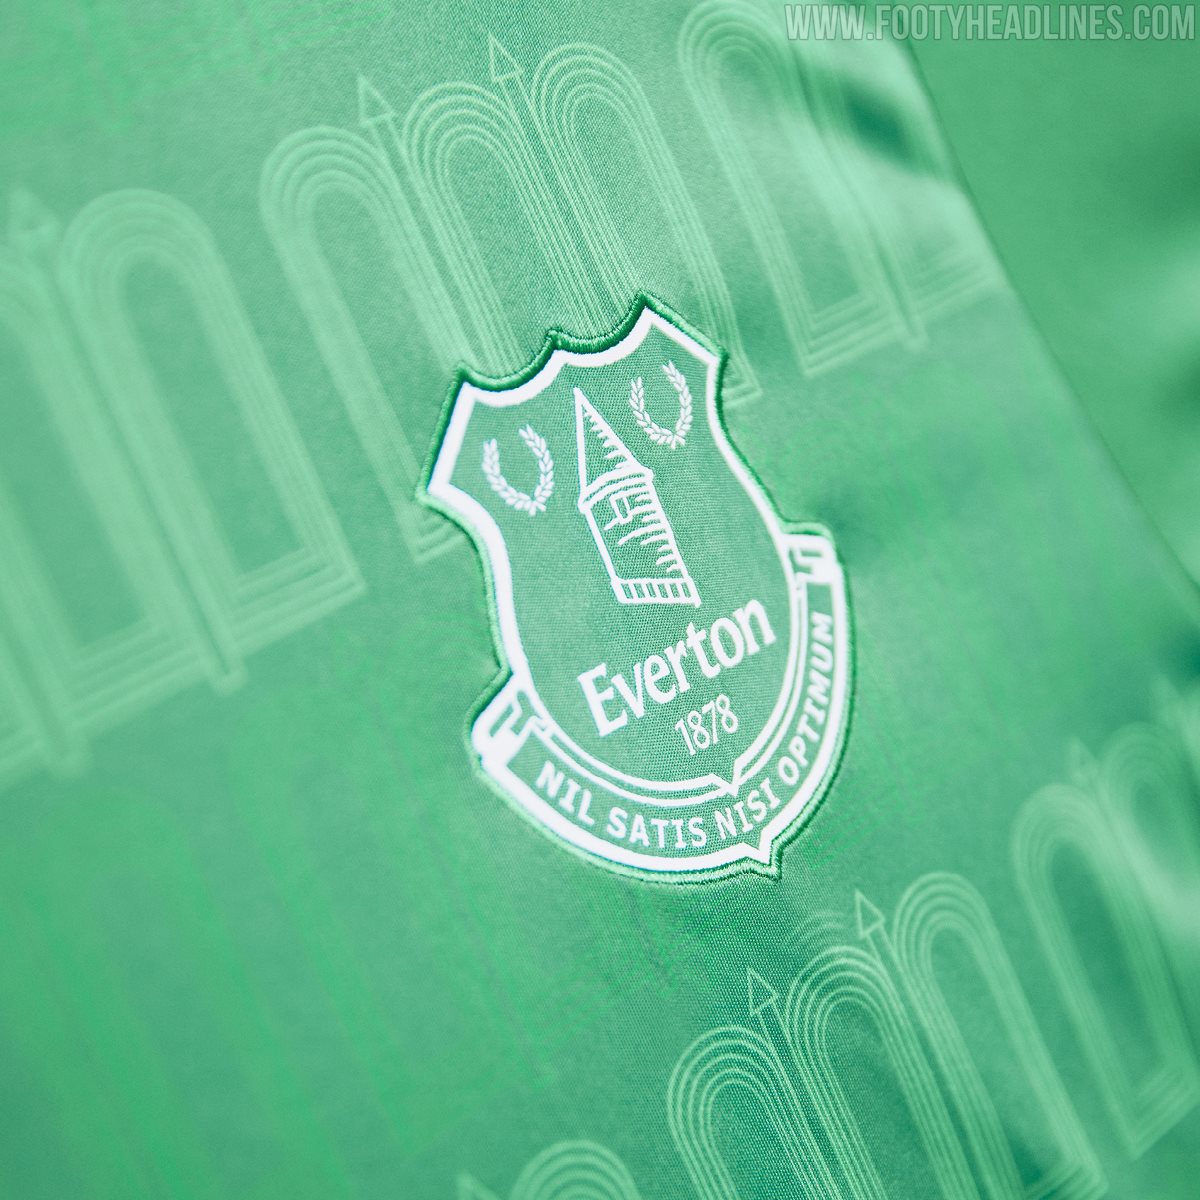 Everton 21-22 Home & Goalkeeper Kits Released - Footy Headlines